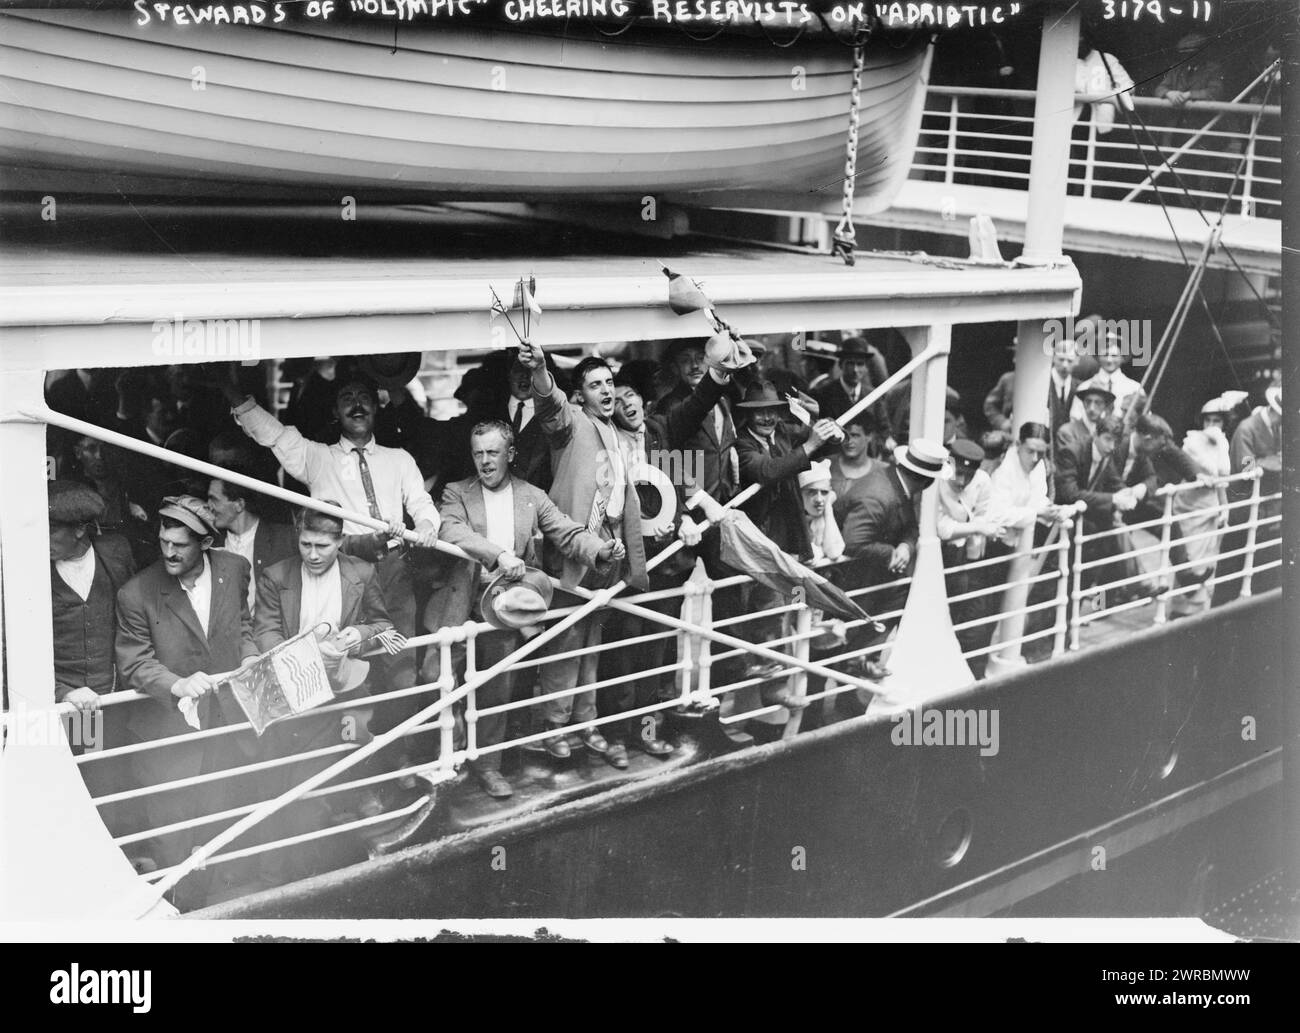 Stewards of OLYMPIC Cheering Reservists on ADRIATIC, Foto zeigt die Stewards der RMS Olympic Cheering Reservists auf der RMS Adriatic., zwischen ca. 1910 und ca. 1915, Glasnegative, 1 negativ: Glas Stockfoto